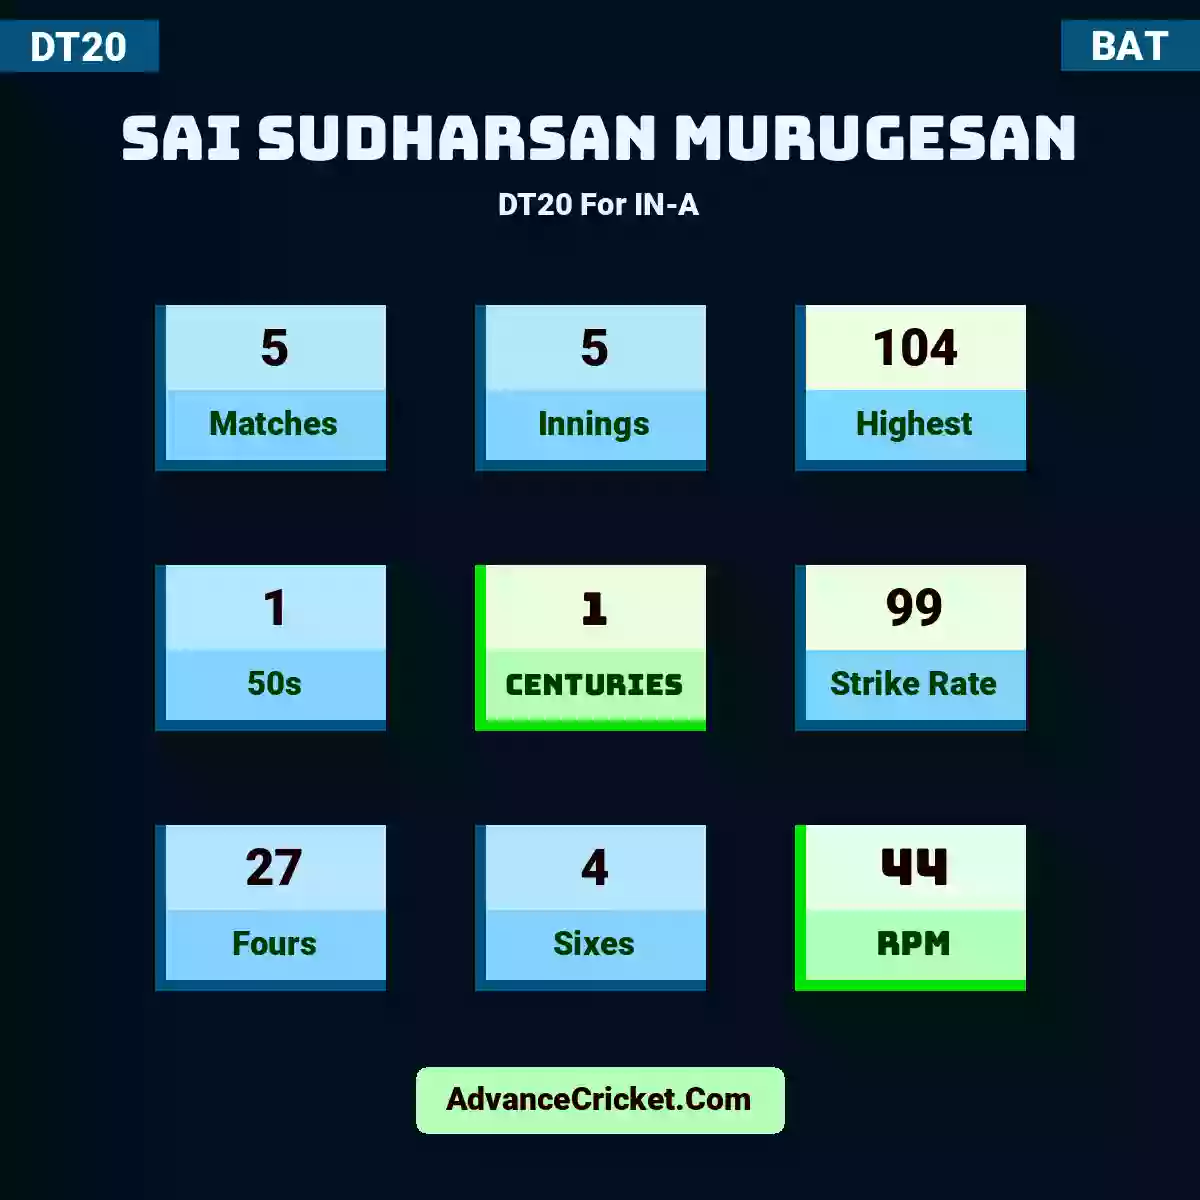 Sai Sudharsan Murugesan DT20  For IN-A, Sai Sudharsan Murugesan played 5 matches, scored 104 runs as highest, 1 half-centuries, and 1 centuries, with a strike rate of 99. S.Sudharsan.Murugesan hit 27 fours and 4 sixes, with an RPM of 44.